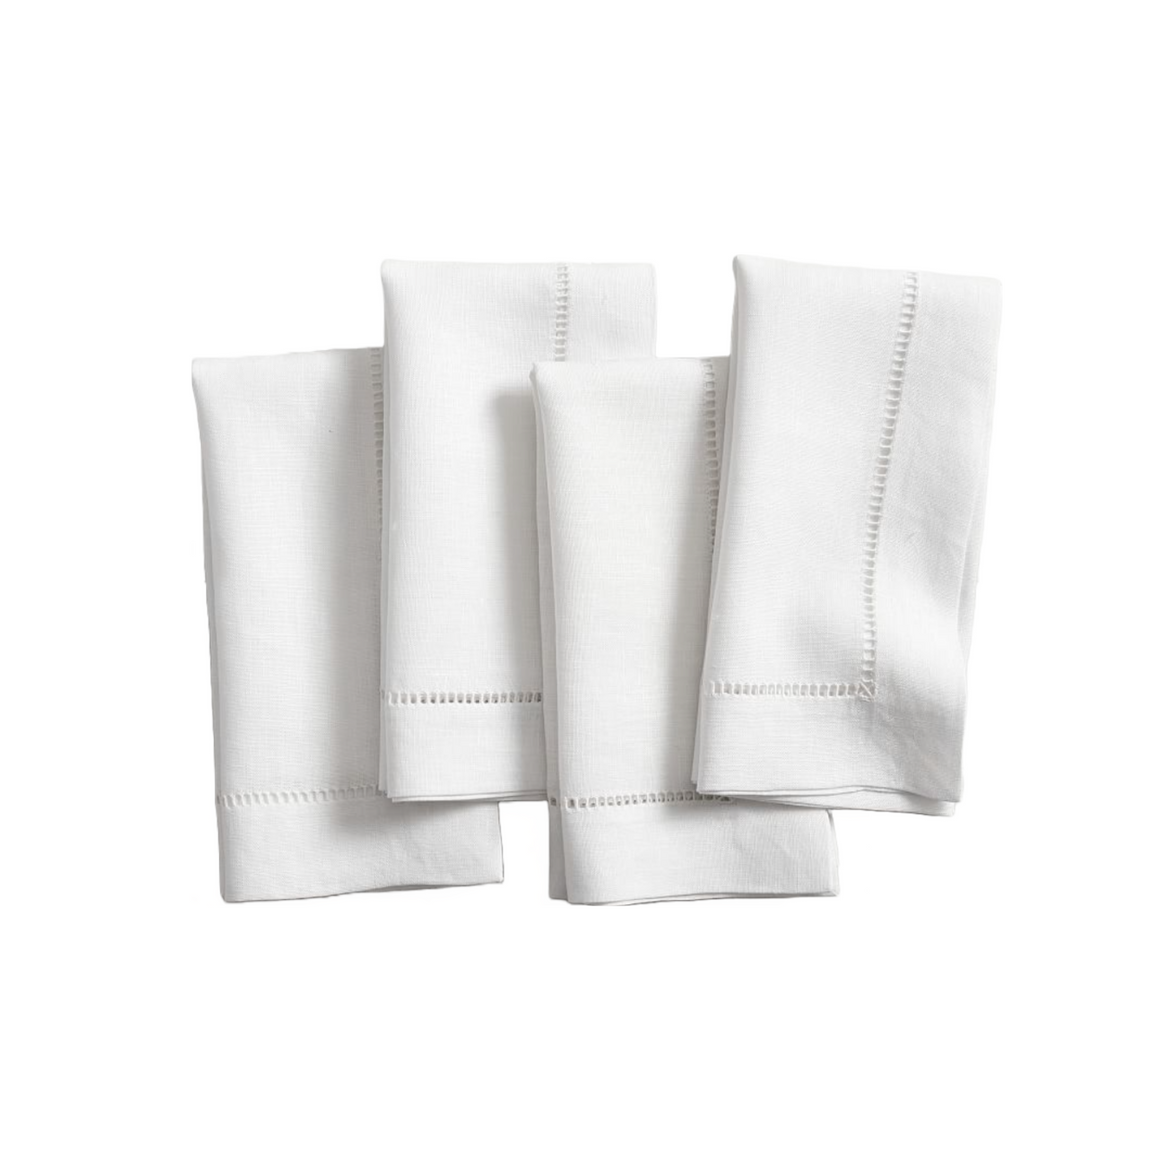 Set of 4 White Linen Napkin with Hemstitch Border